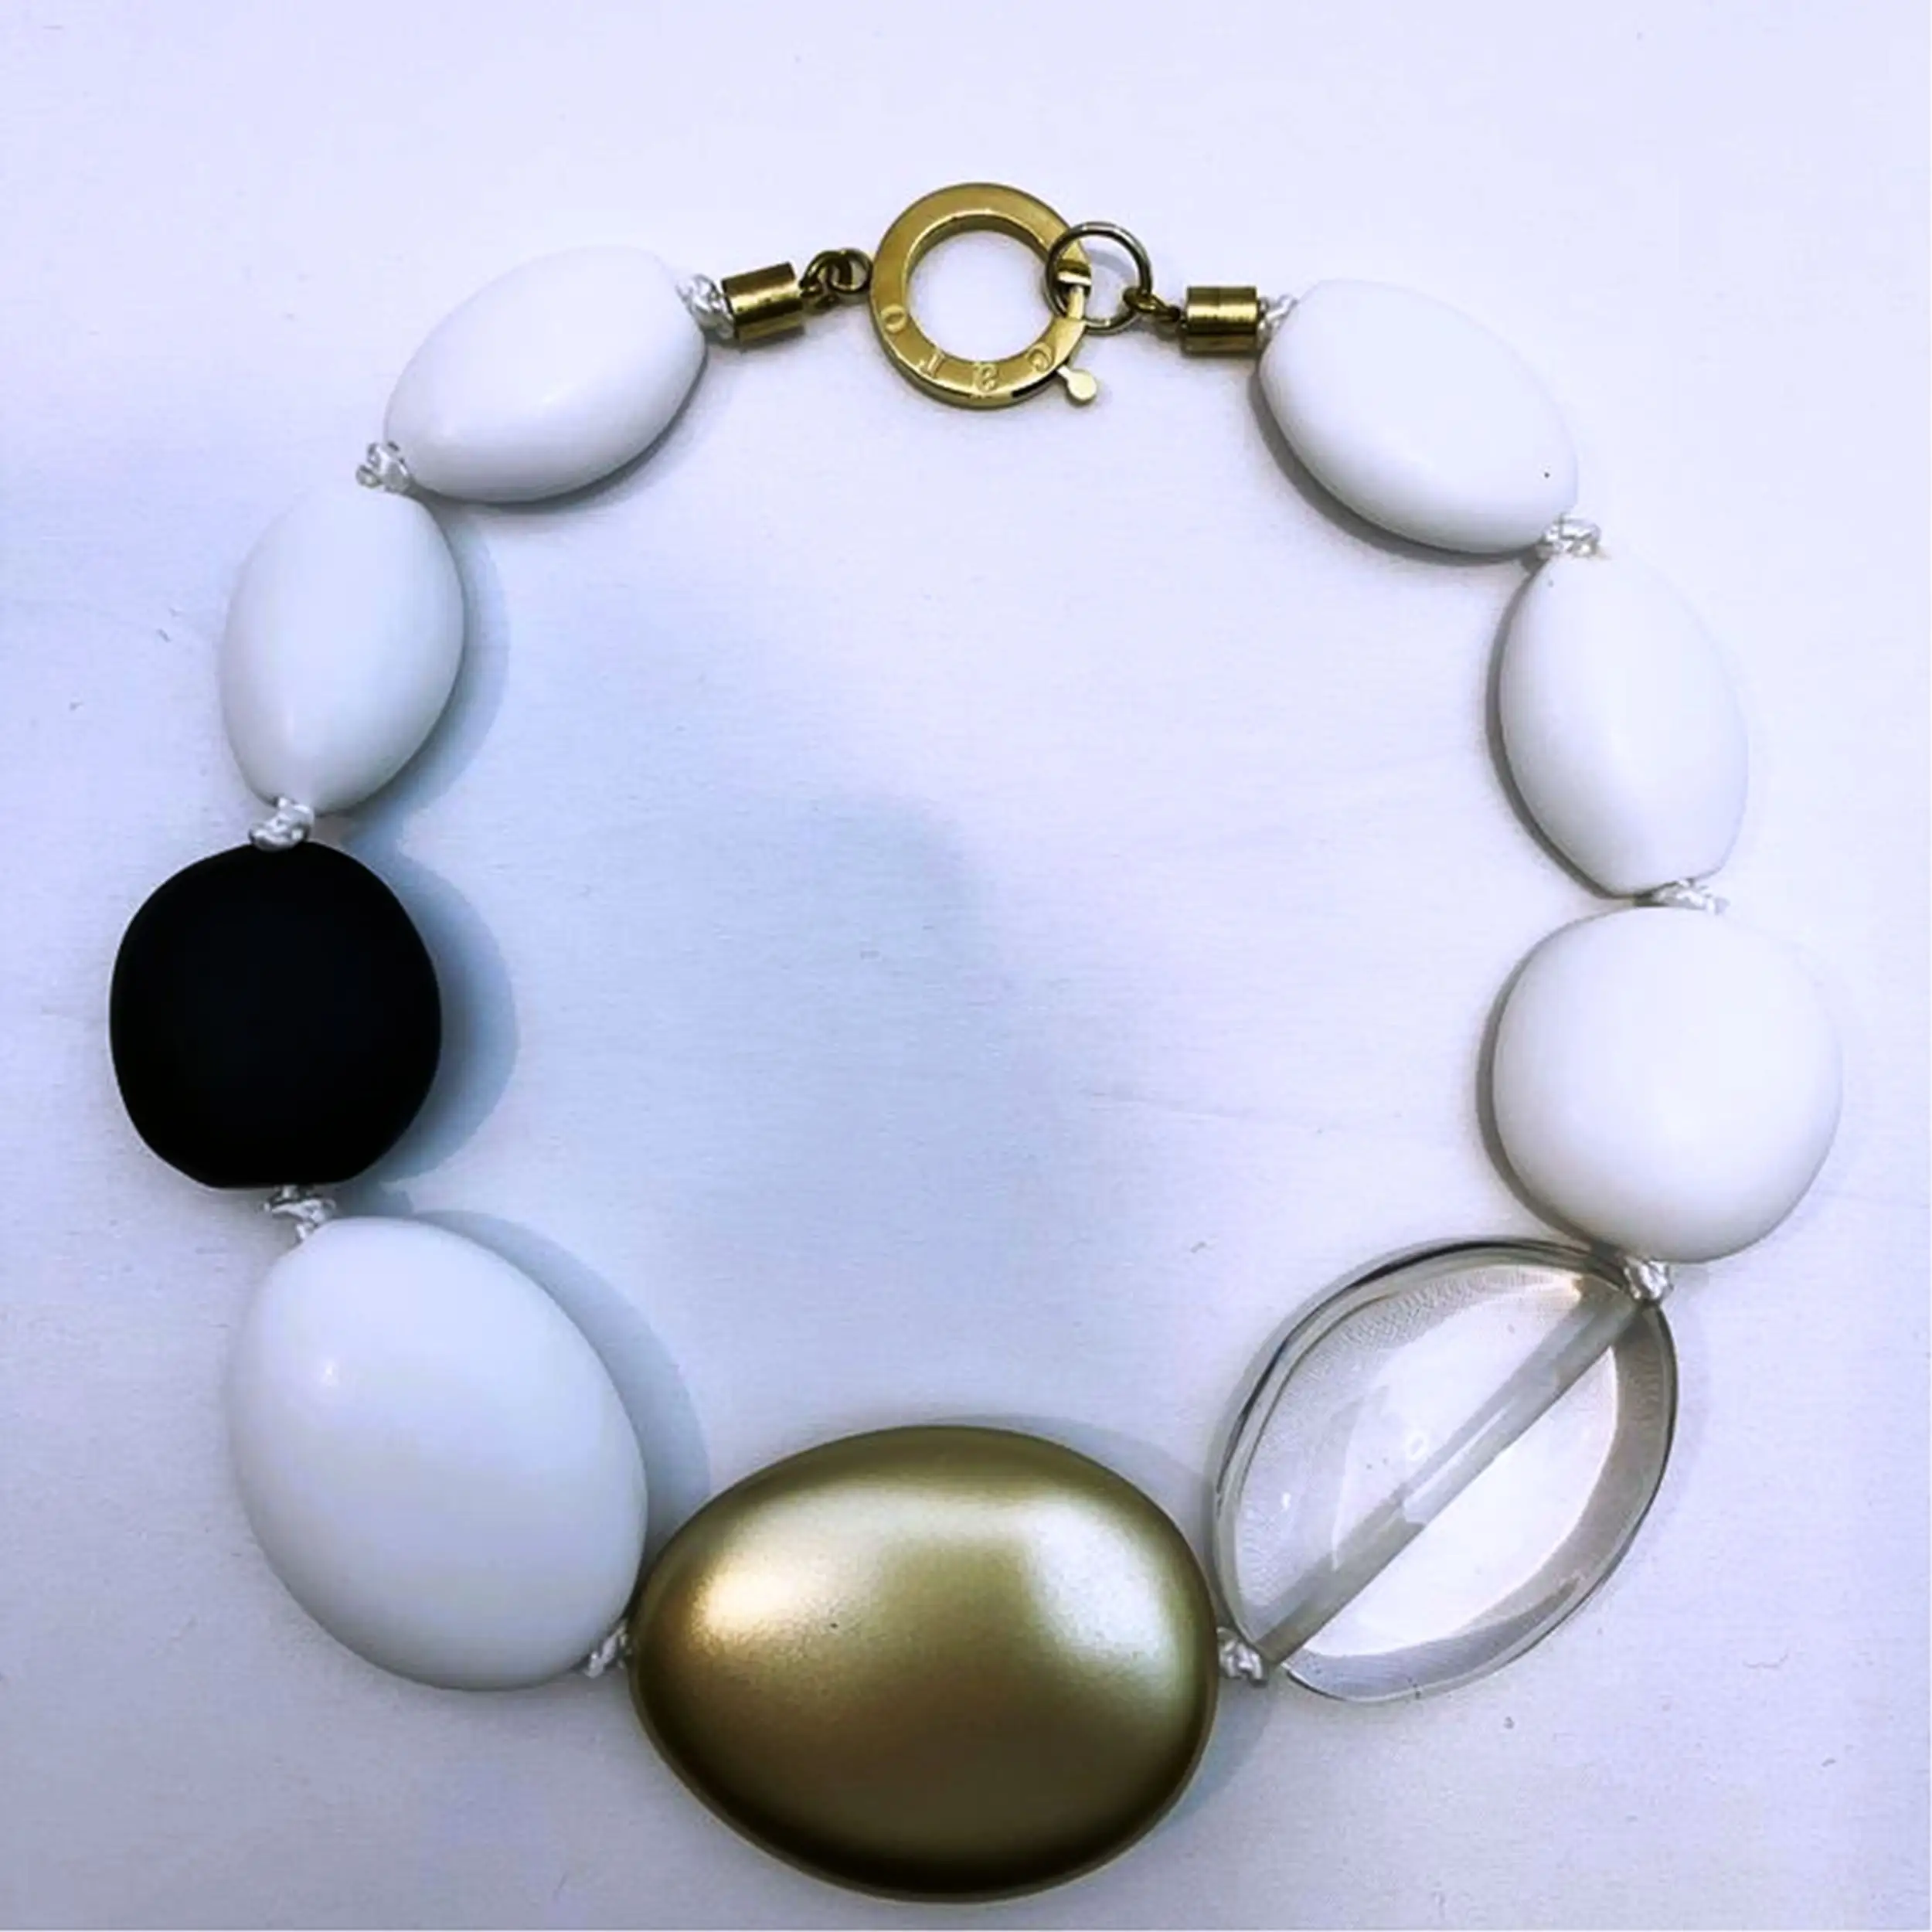 Collana grossa caro perline in resina di colore e dimensioni originali fatte a mano di origine indiana ultra lucida unica